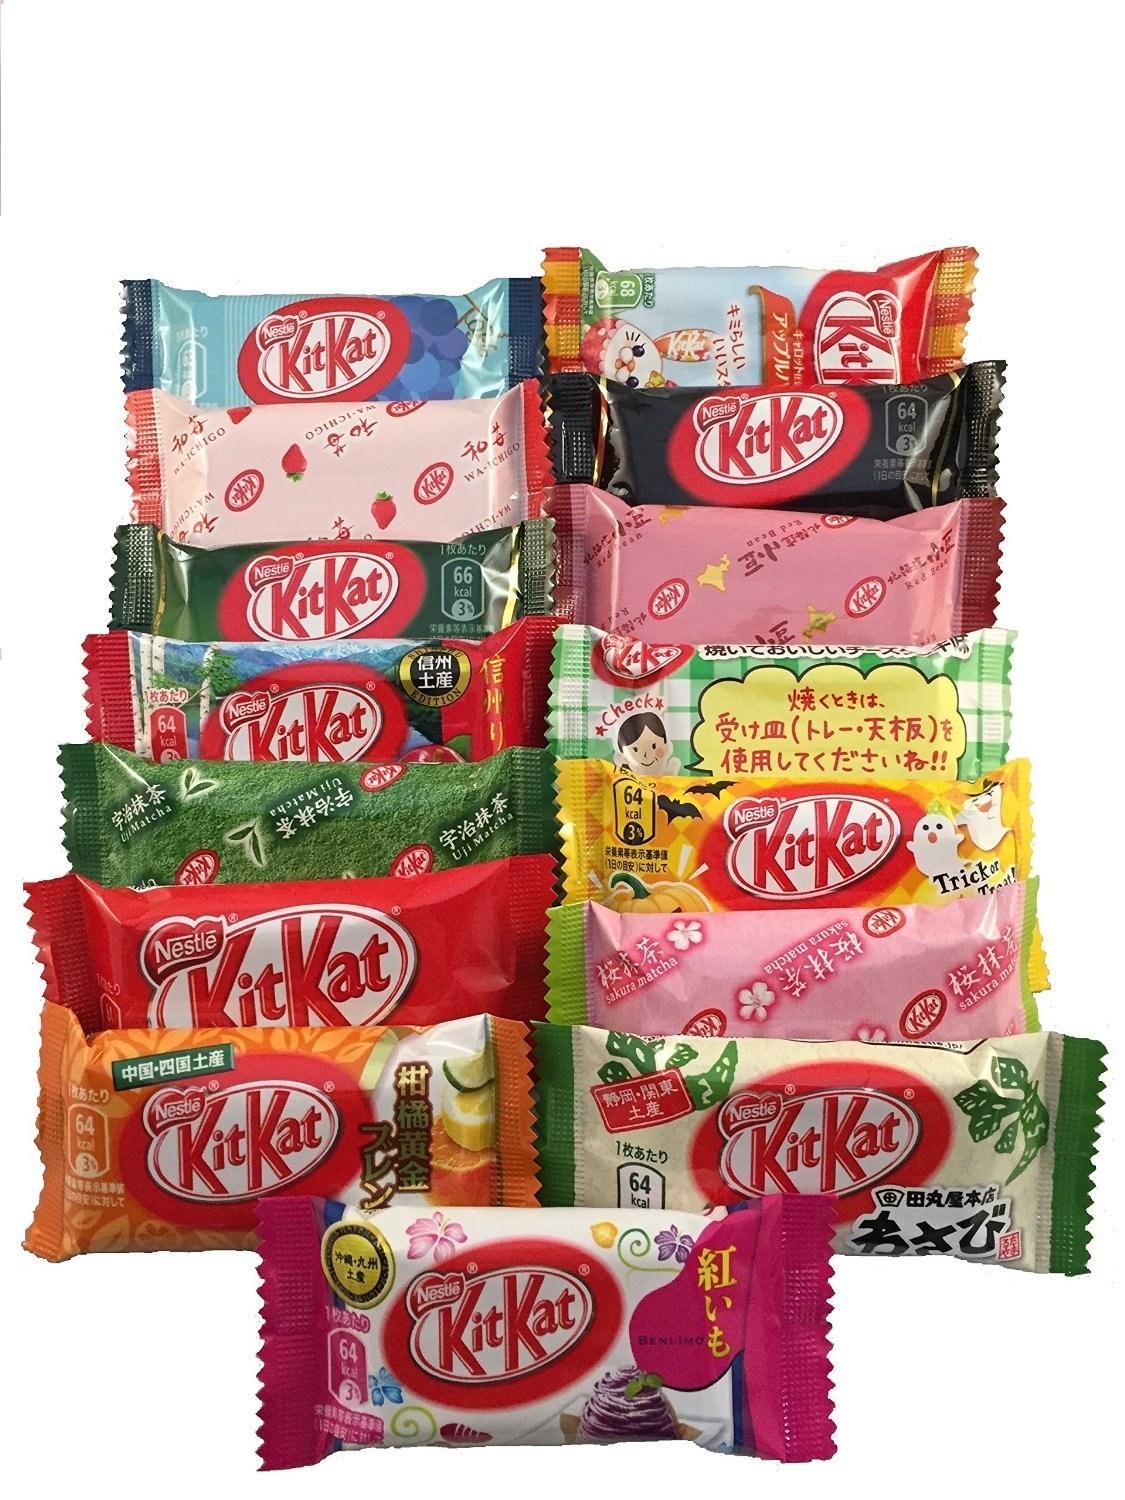 Different-flavored Japanese Kit Kat bars